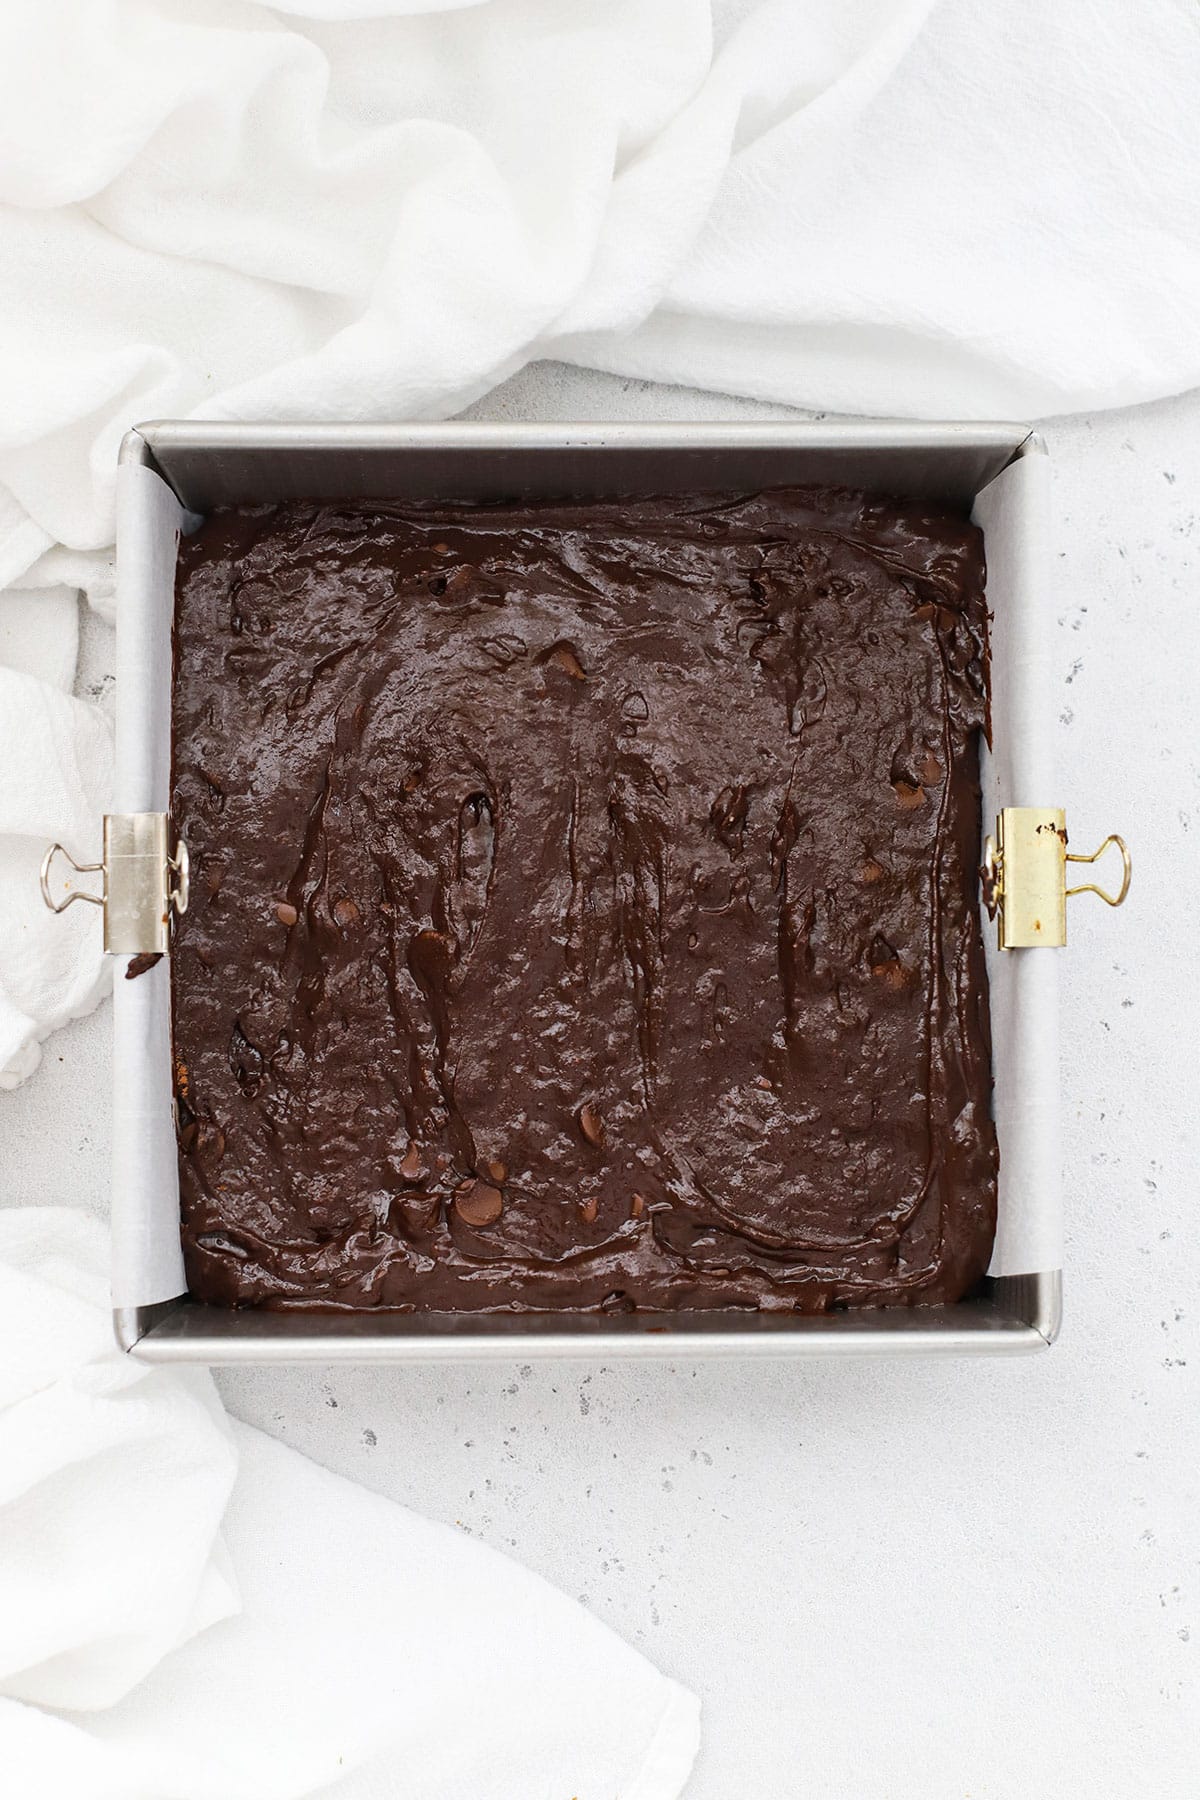 Gluten-free vegan brownie batter in a square metal pan